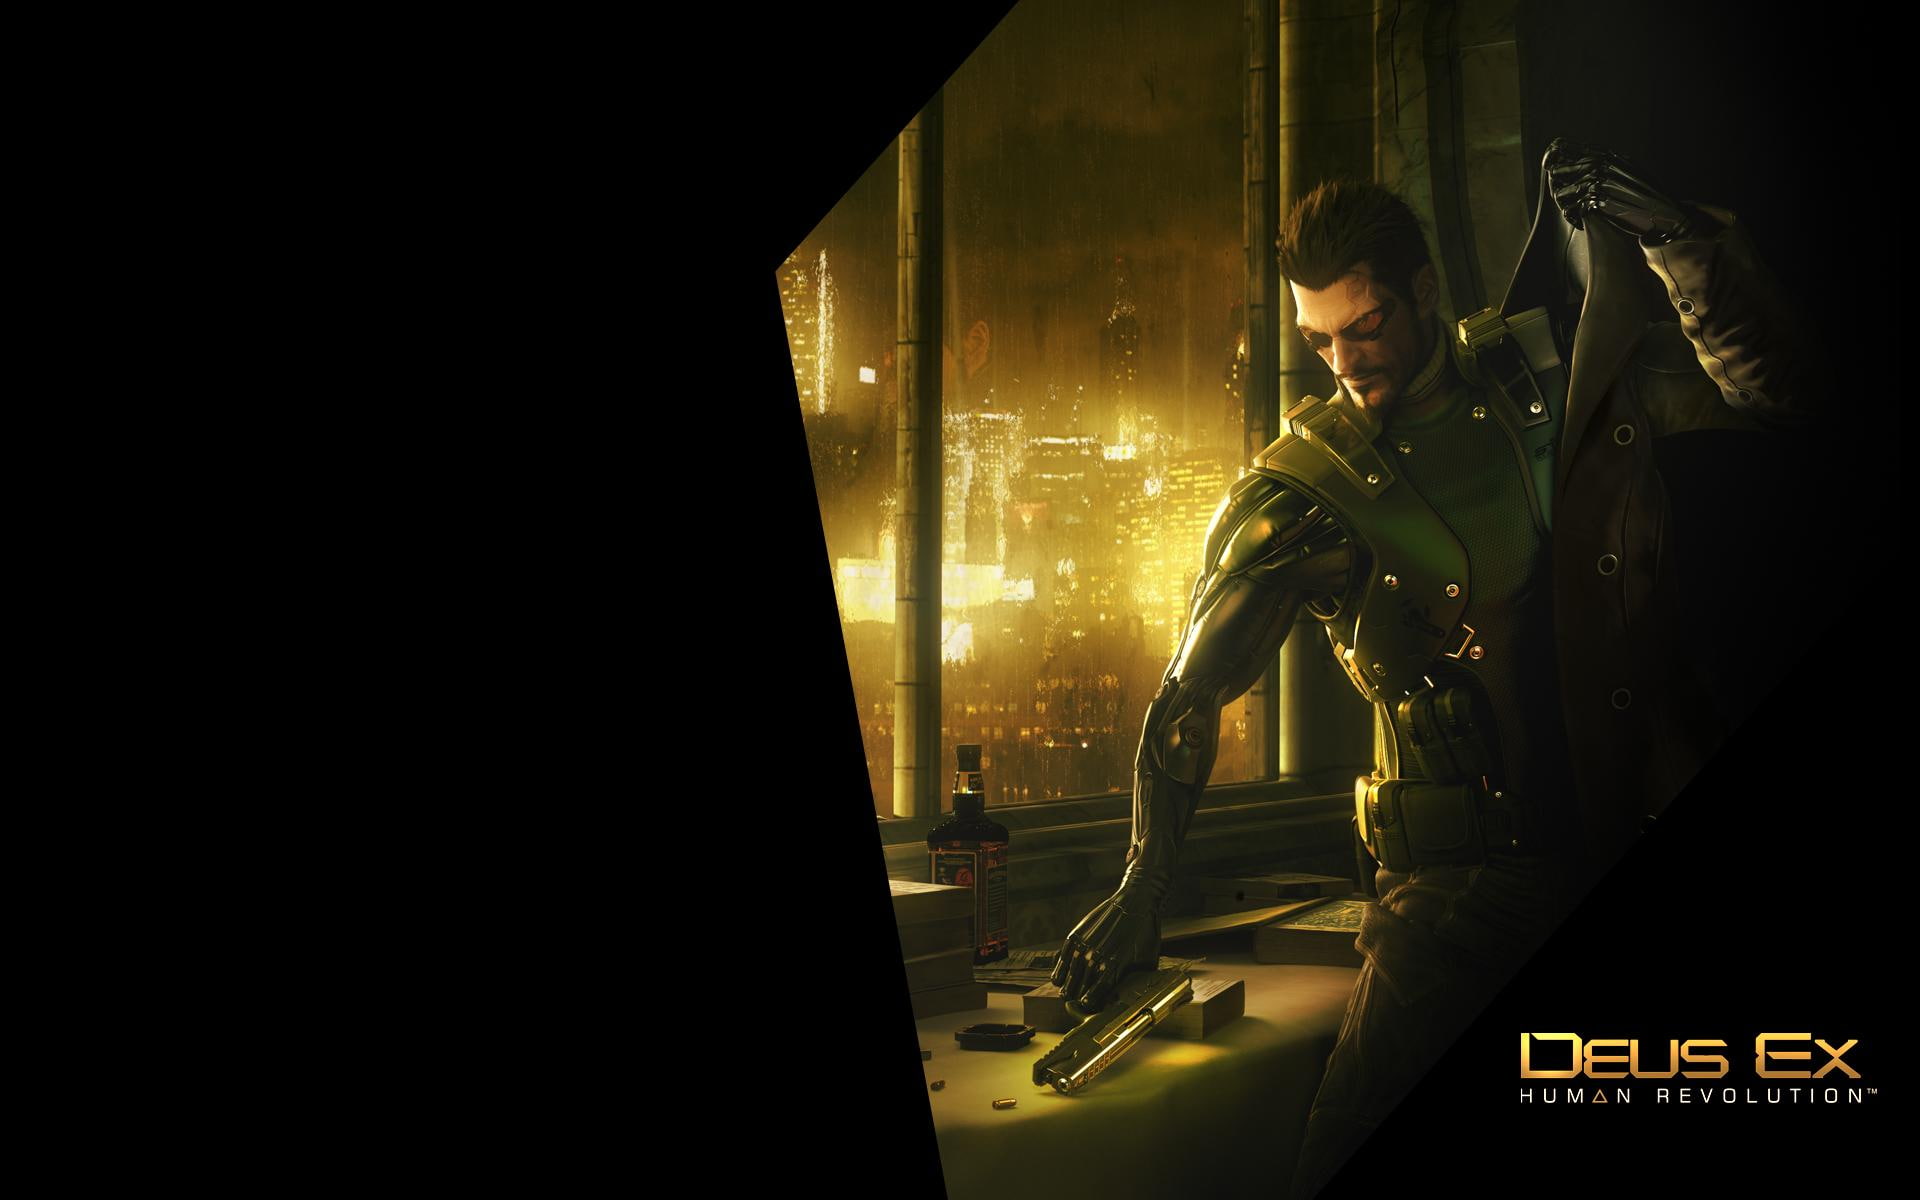 Deus Ex Human Revolution, games